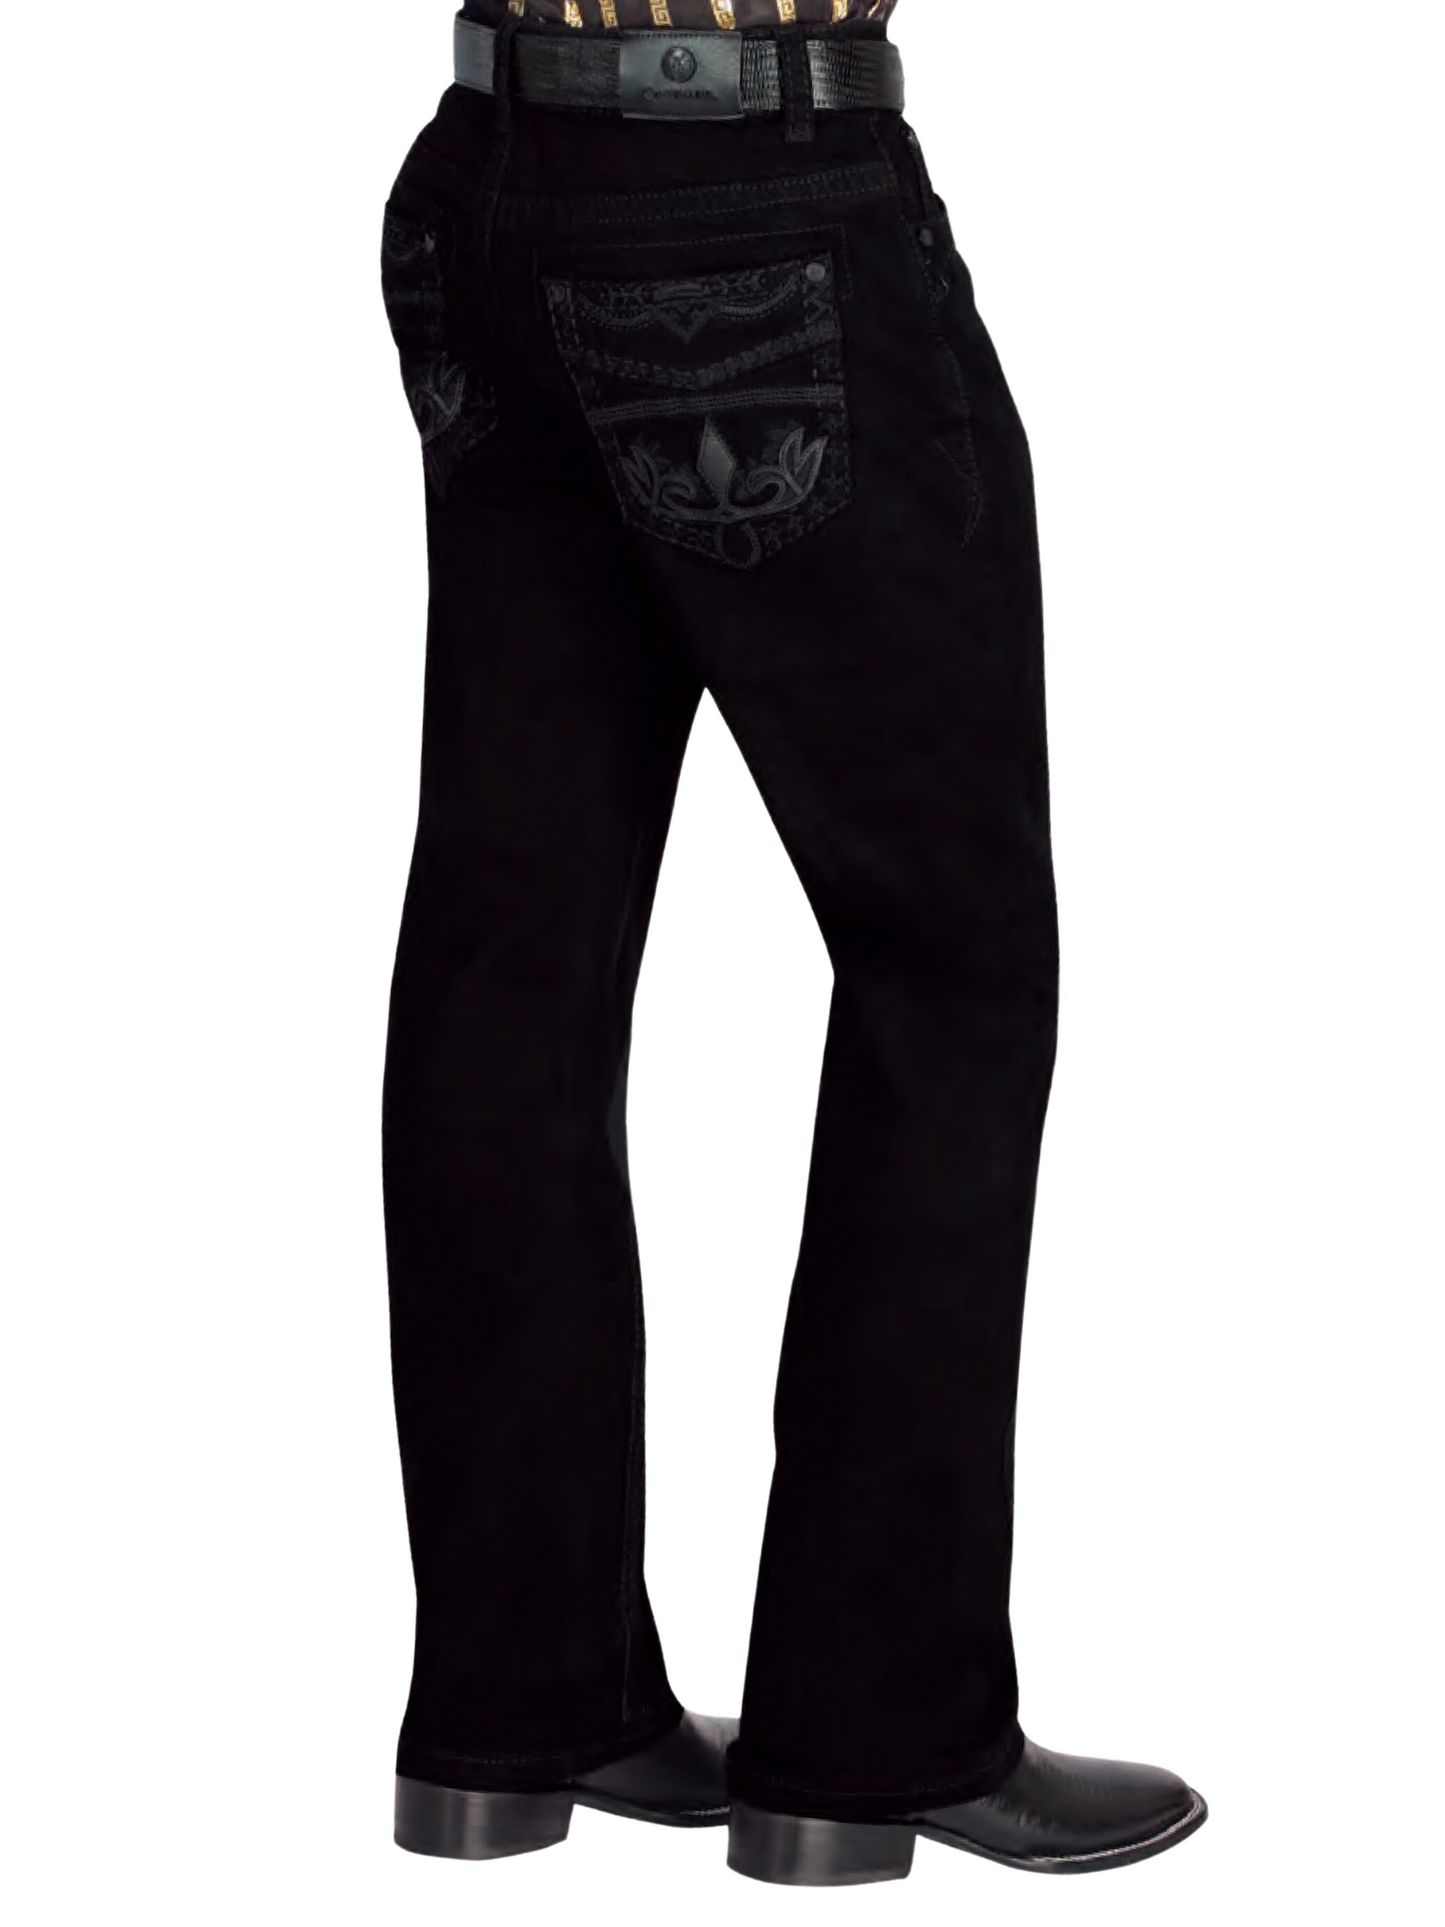 Pantalon Vaquero de Mezclilla Boot Cut Negro para Hombre 'Centenario' - ID: 44840 Pantalones de Vaquero Centenario 